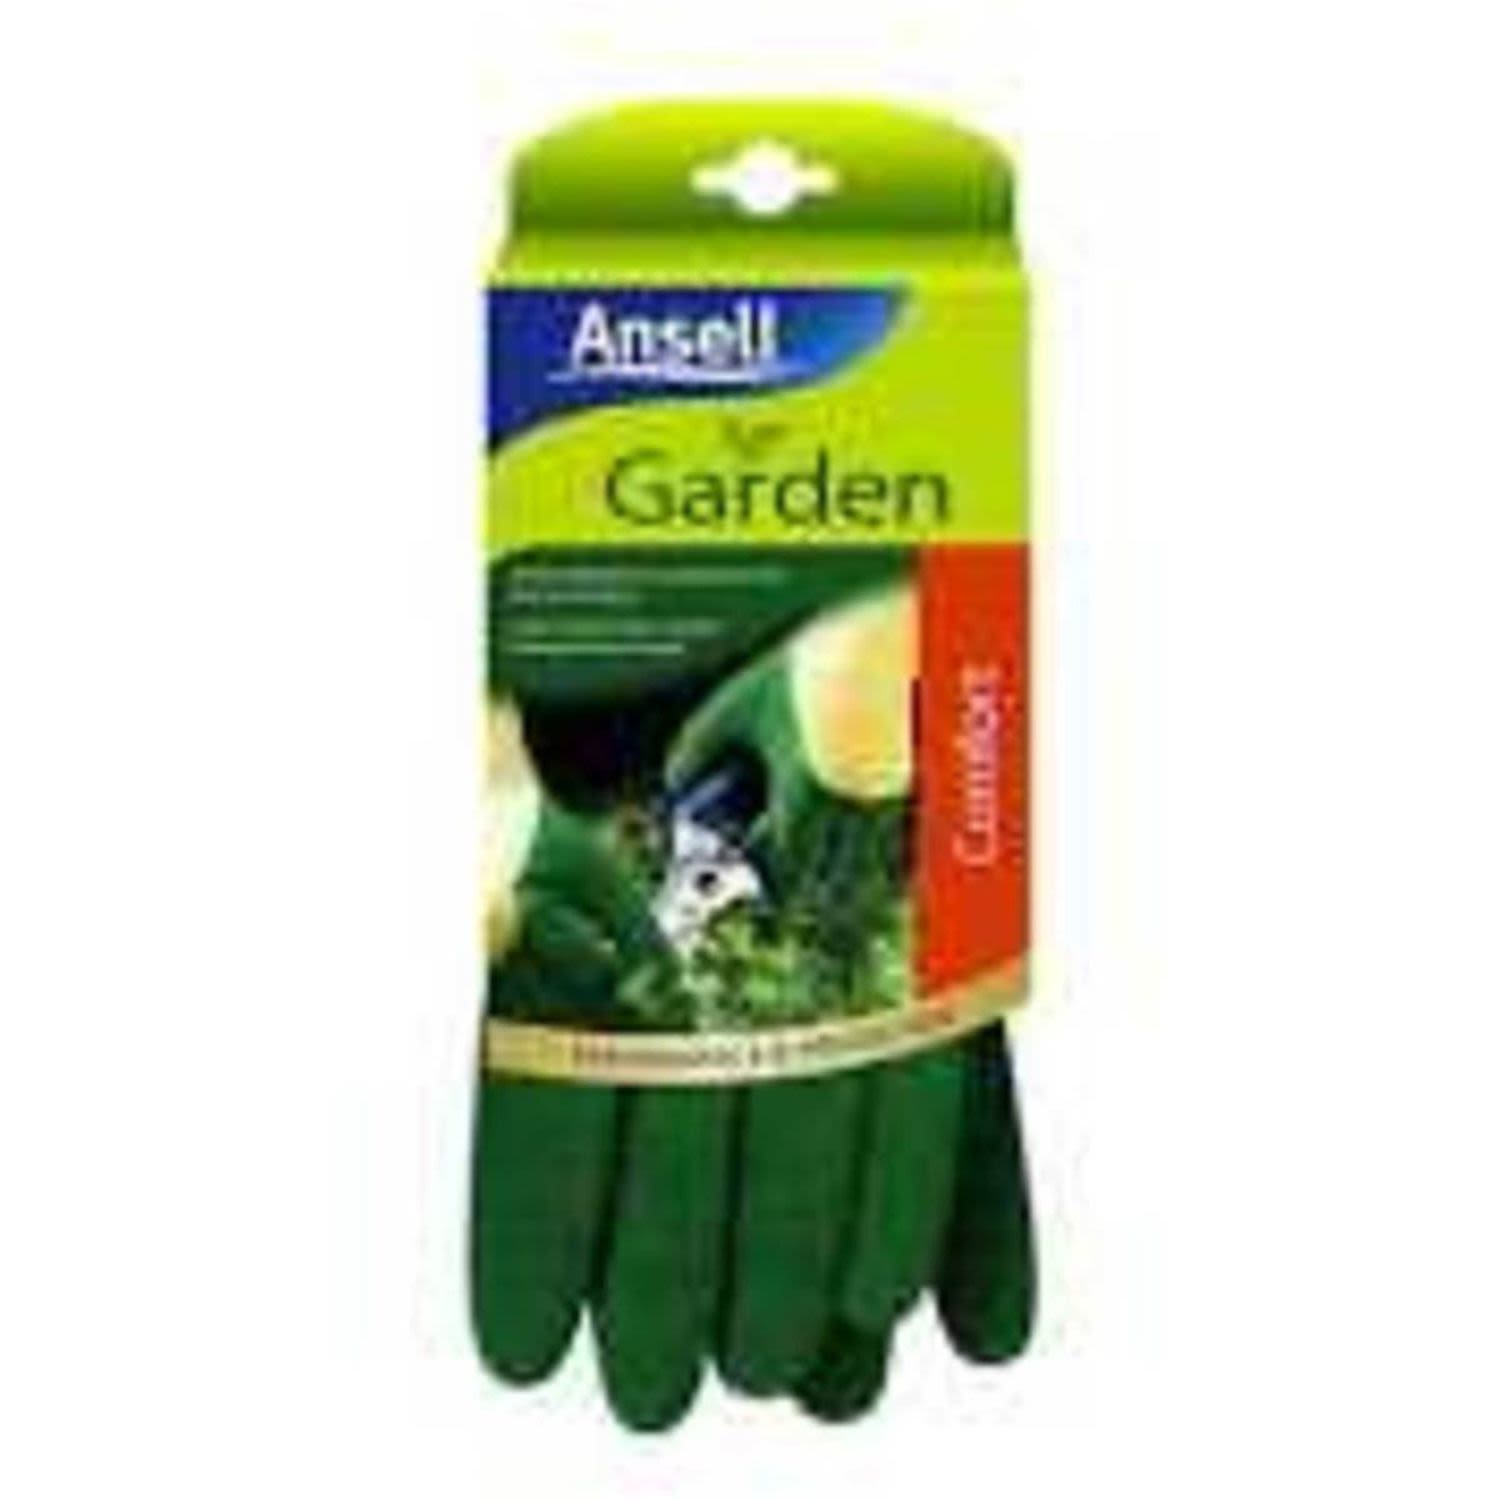 Ansell Garden Comfort Gloves Medium, 1 Each